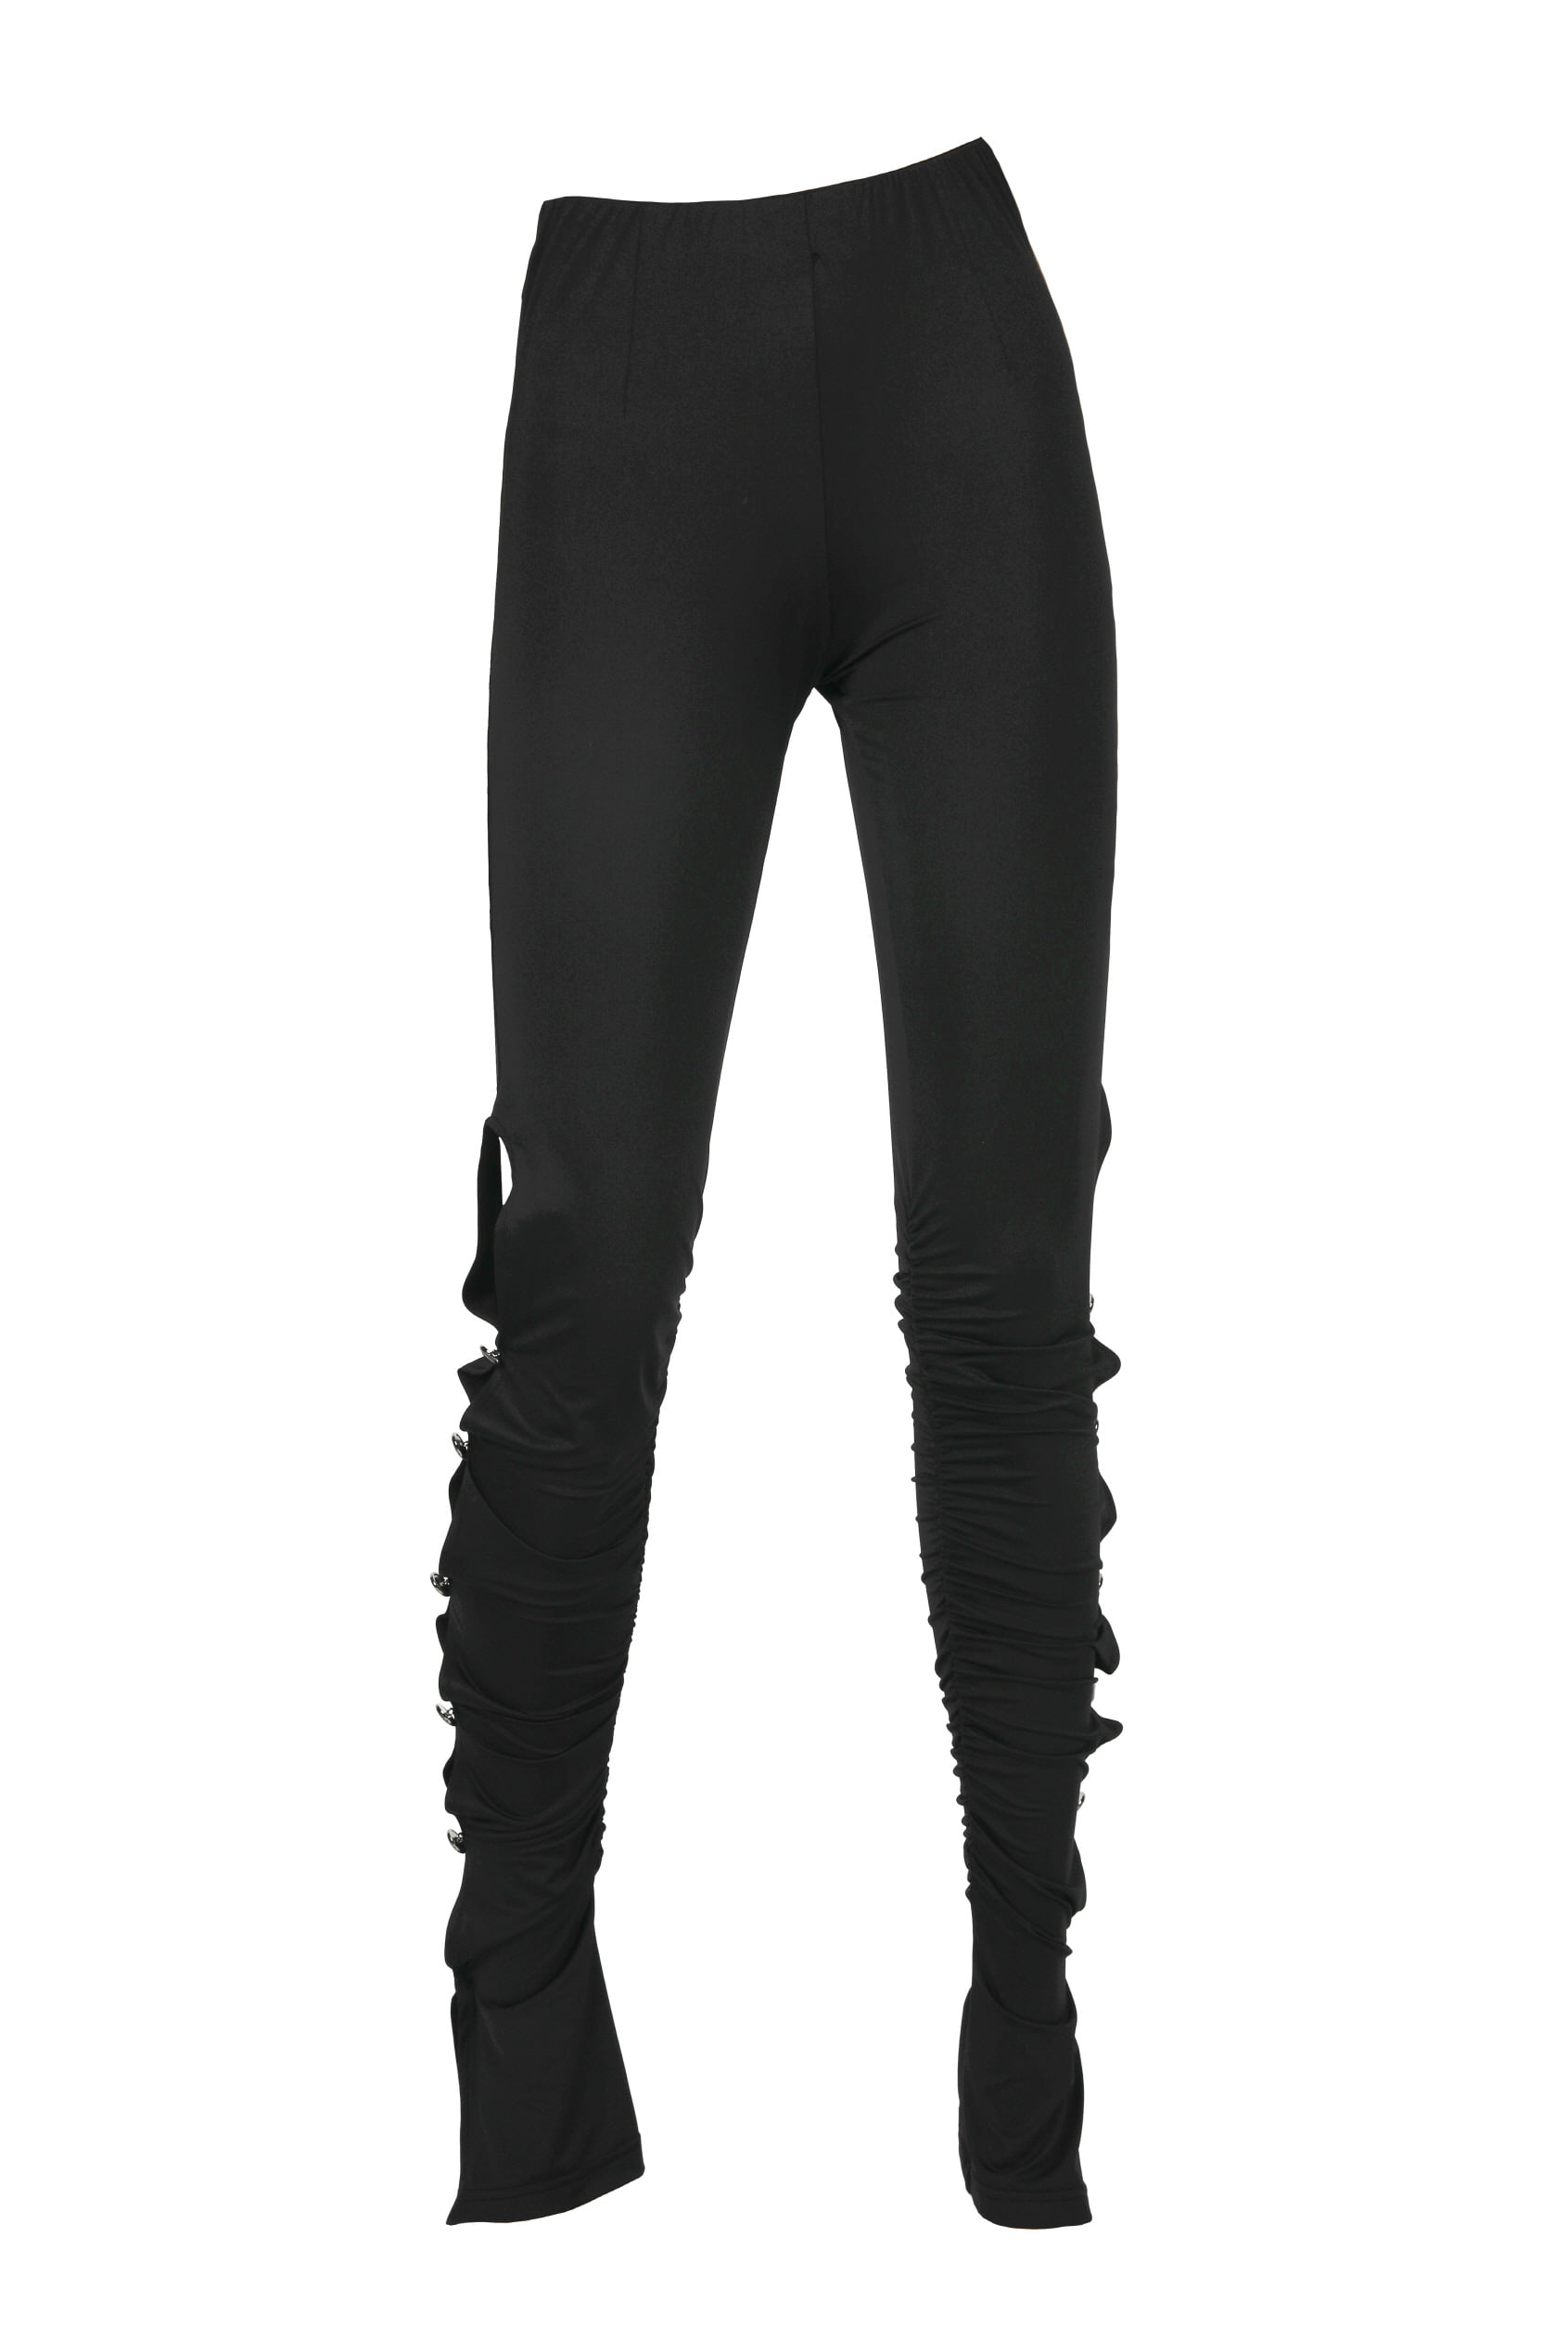 Ruched loose leggings(black)